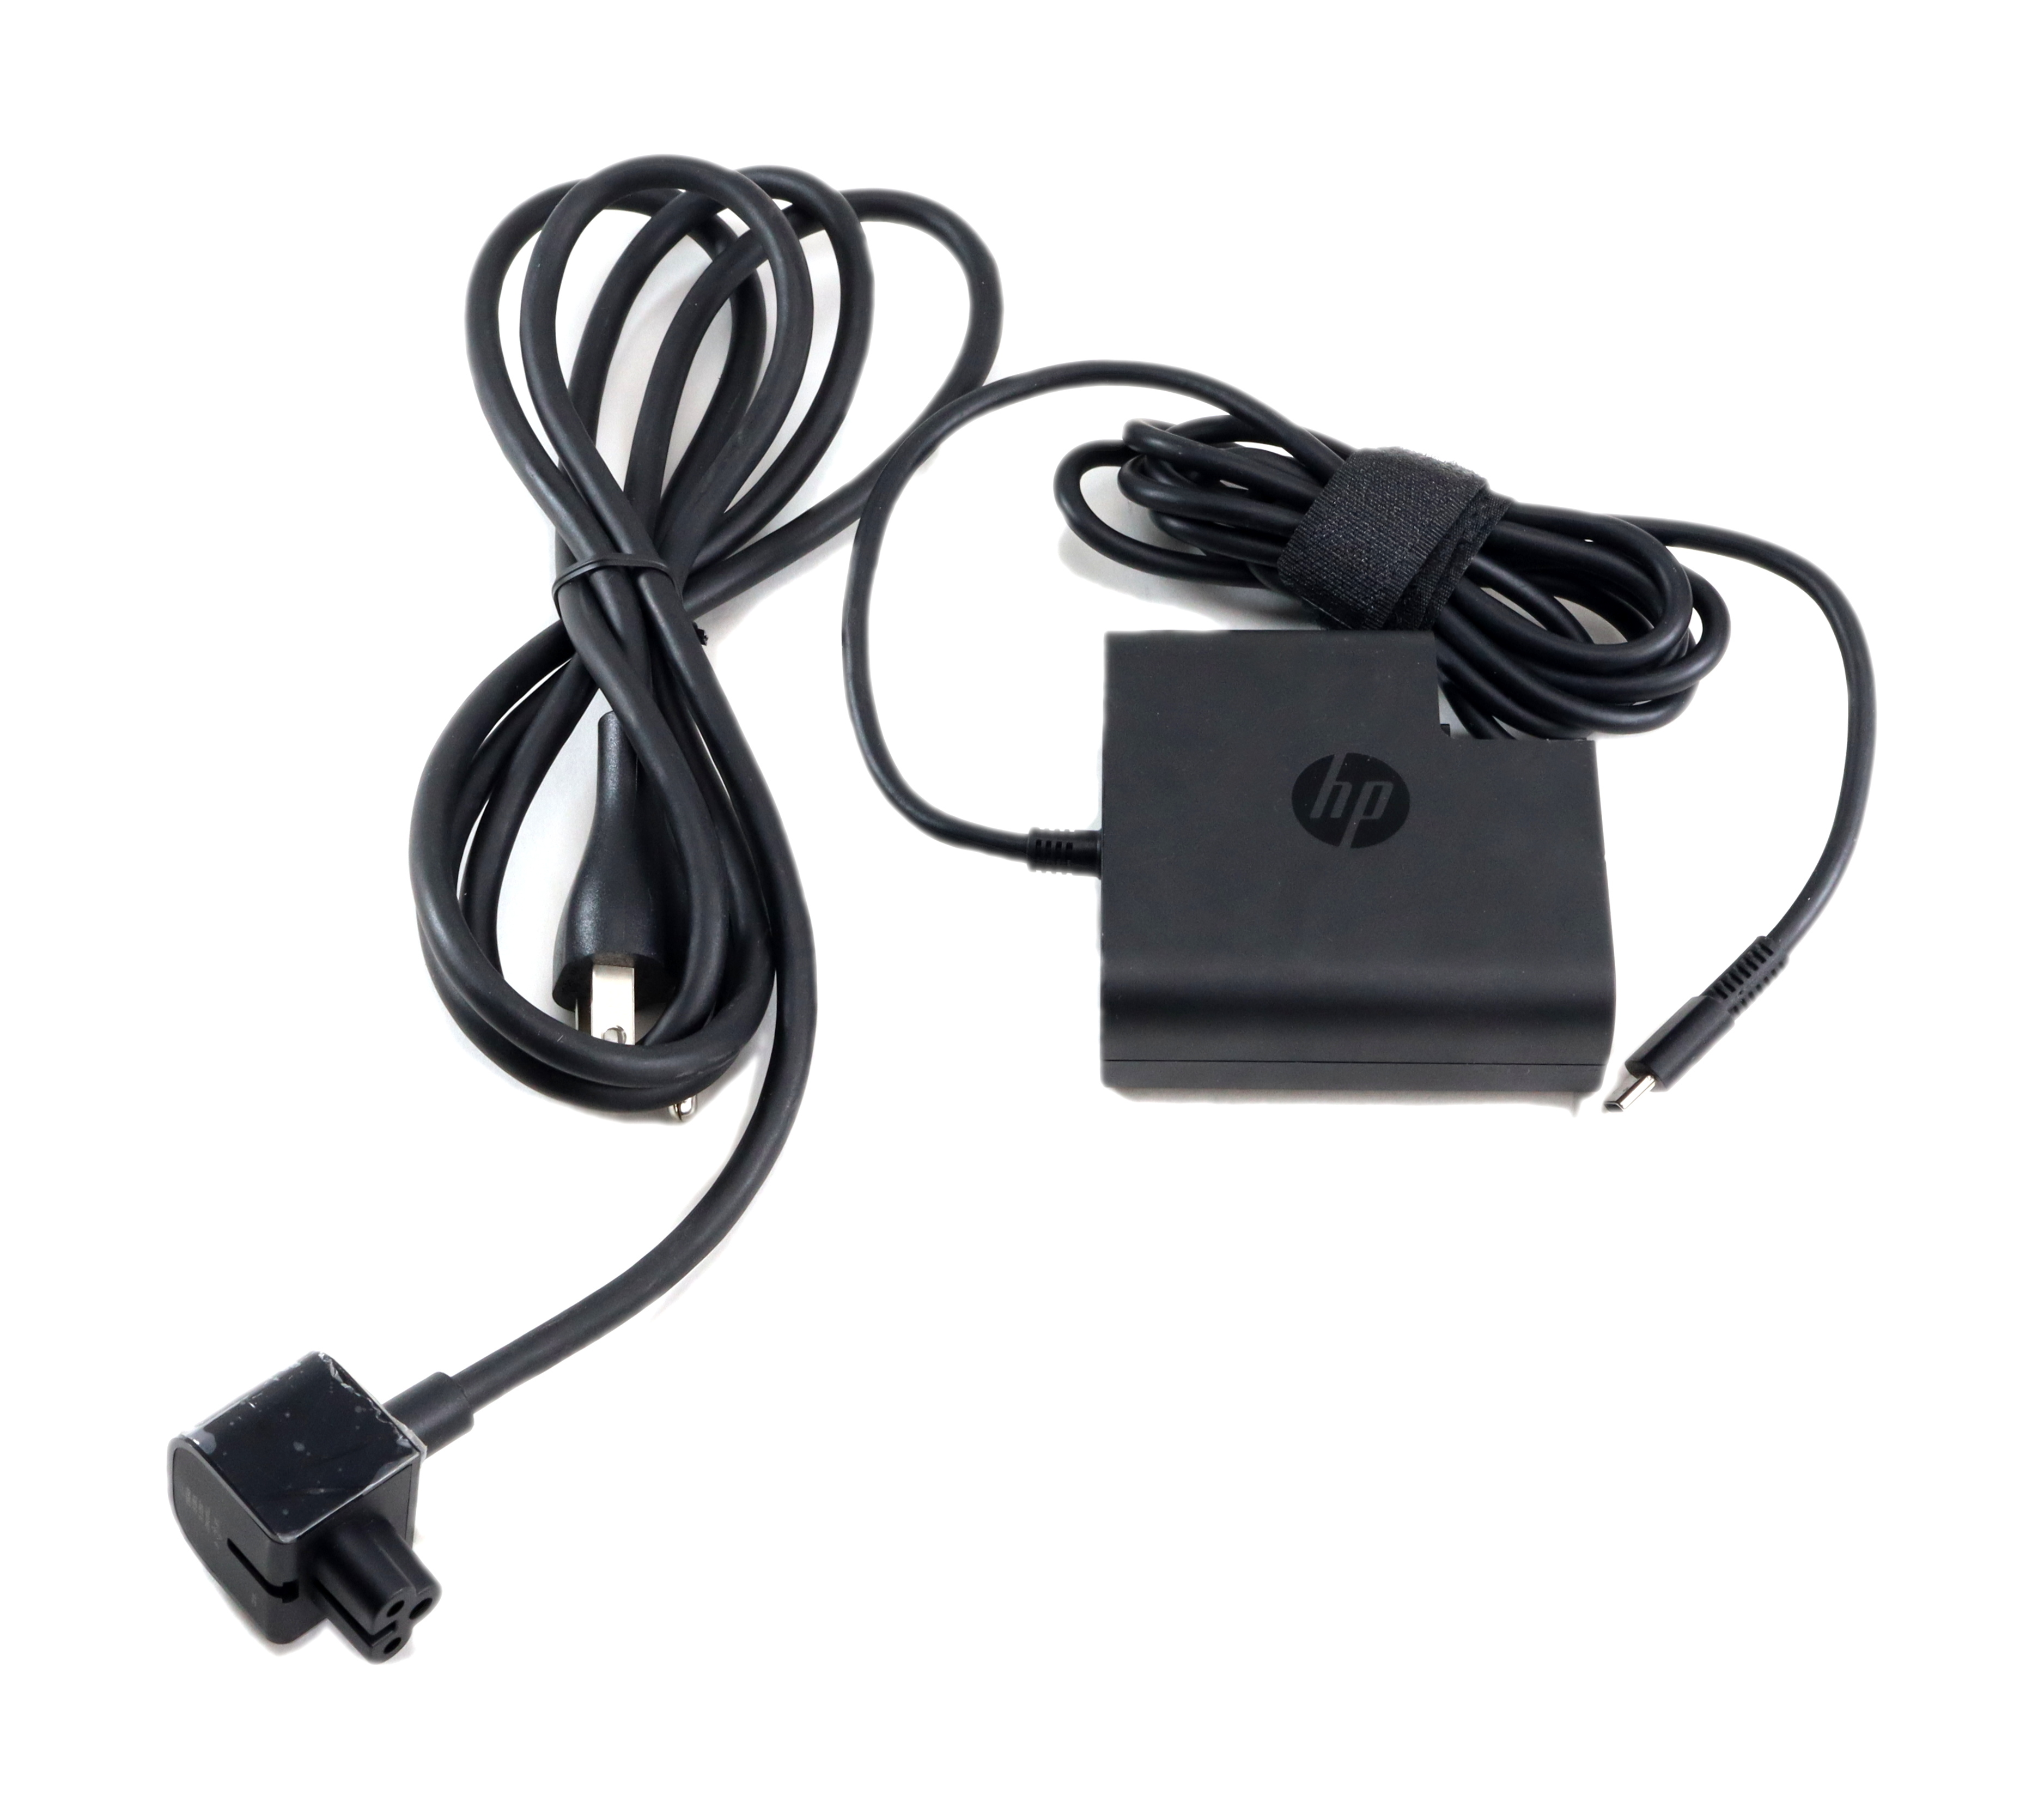 HP AC Adapter 65W USB-C for HP Pro Elite Spectre Series X2 G2 TPN-AA03 925740-004 860209-850